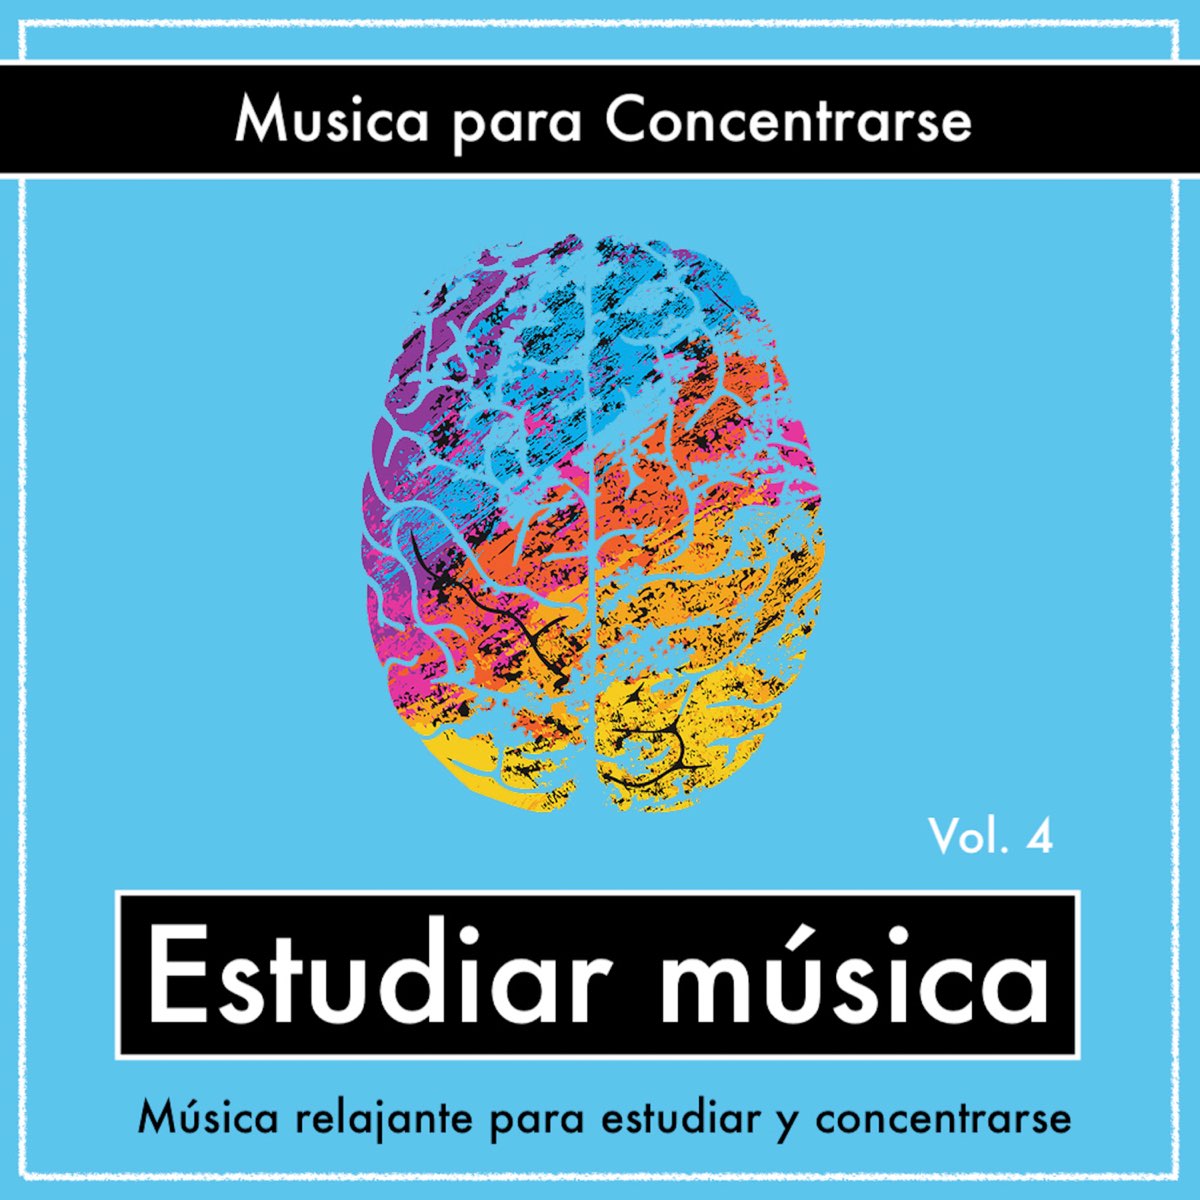 Estudiar Musica: Música relajante para estudiar, música para leer